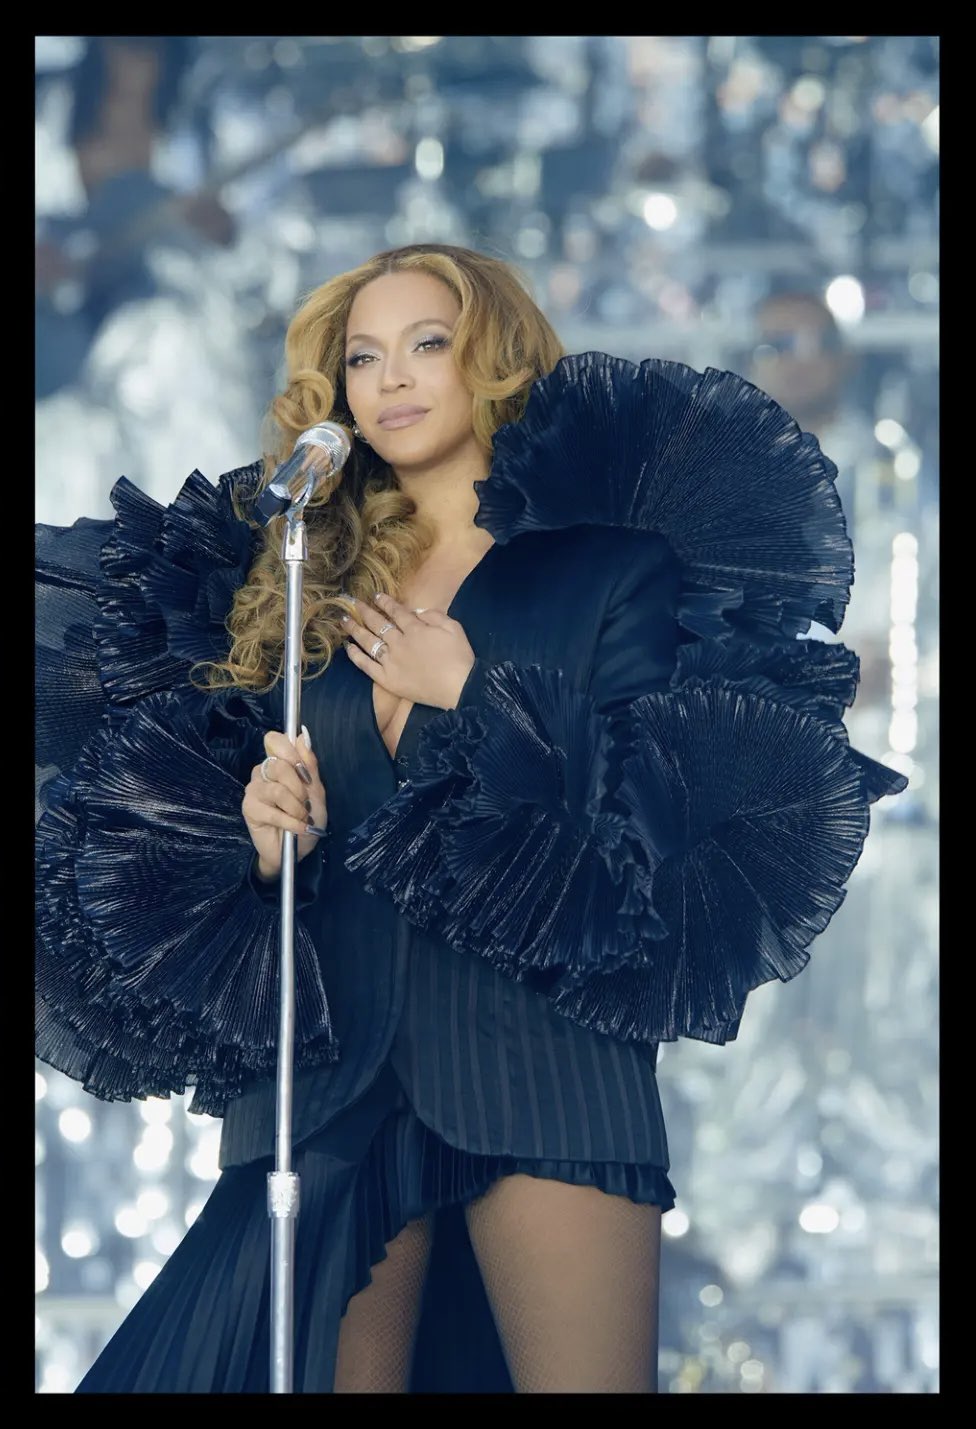 Beyonce wore Robert Wun @ Renaissance’ tour in London